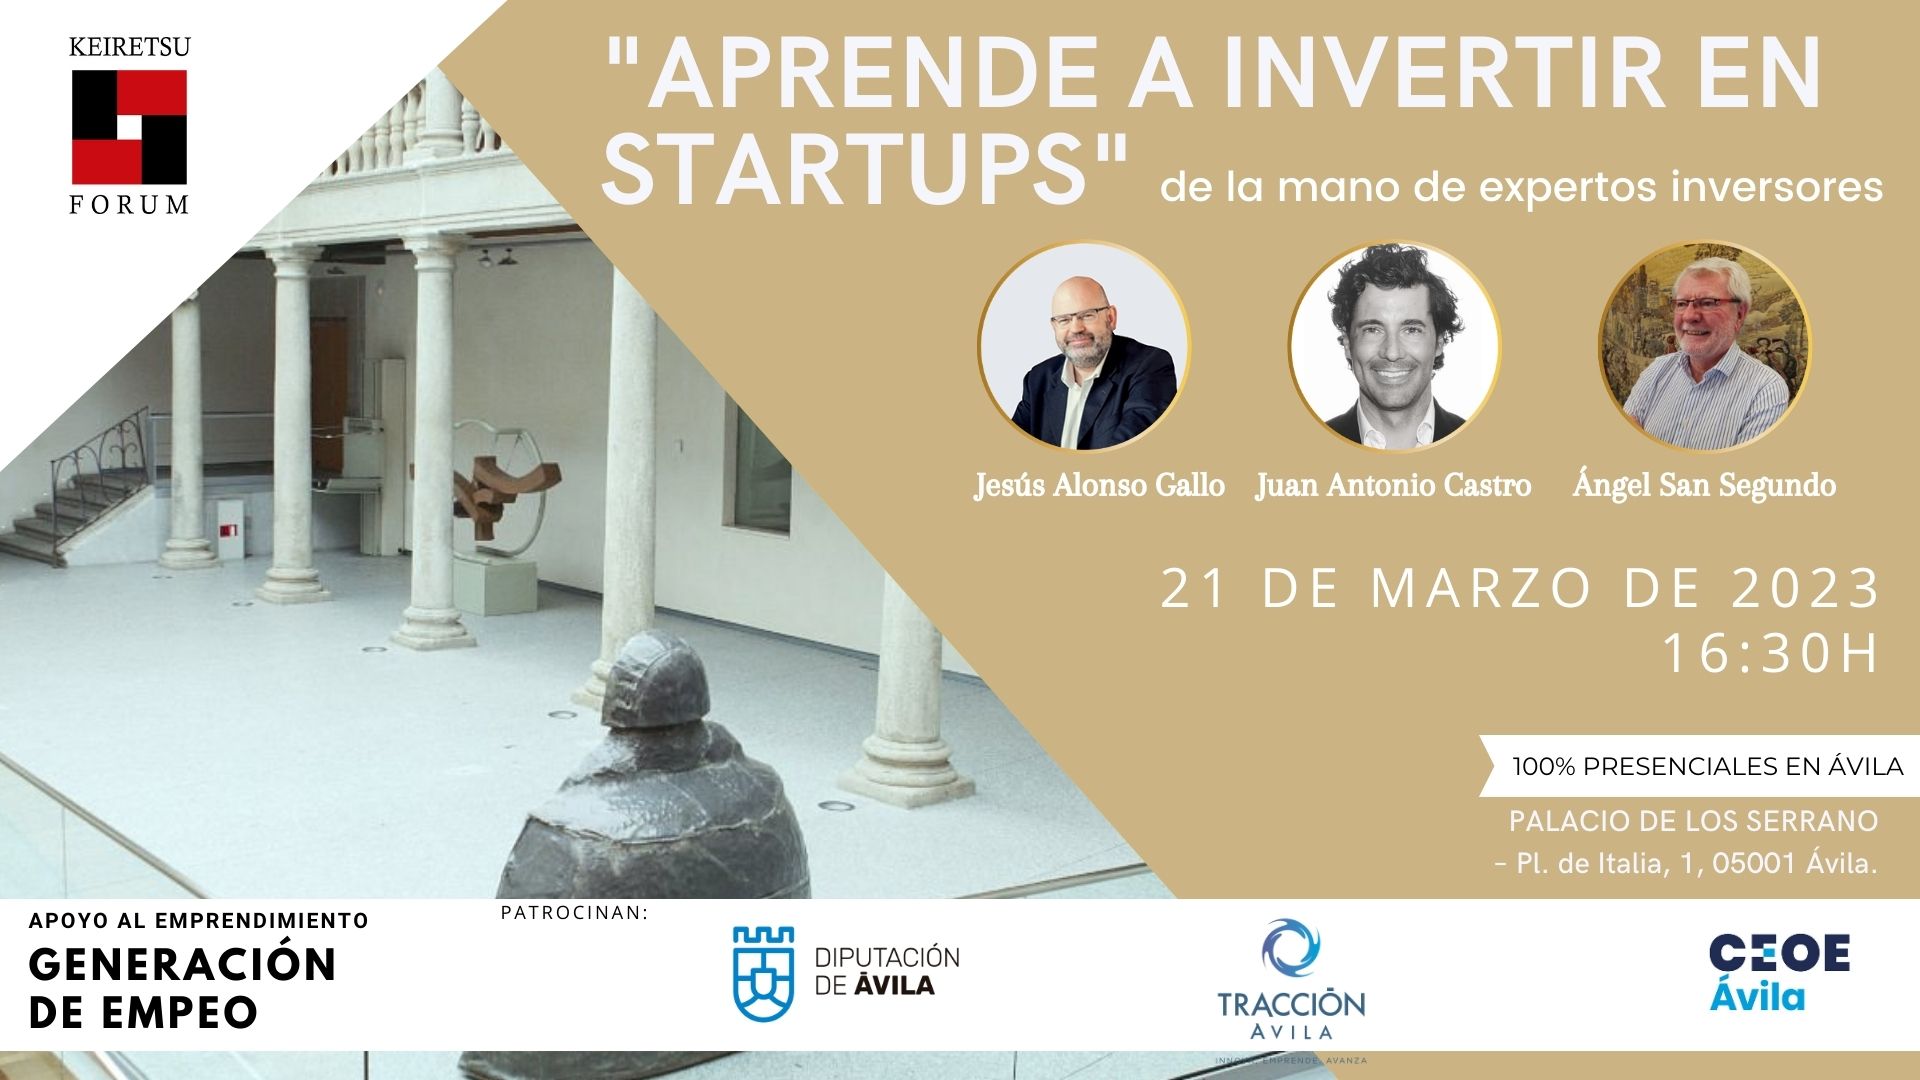 Aprender a invertir en startups Ávila